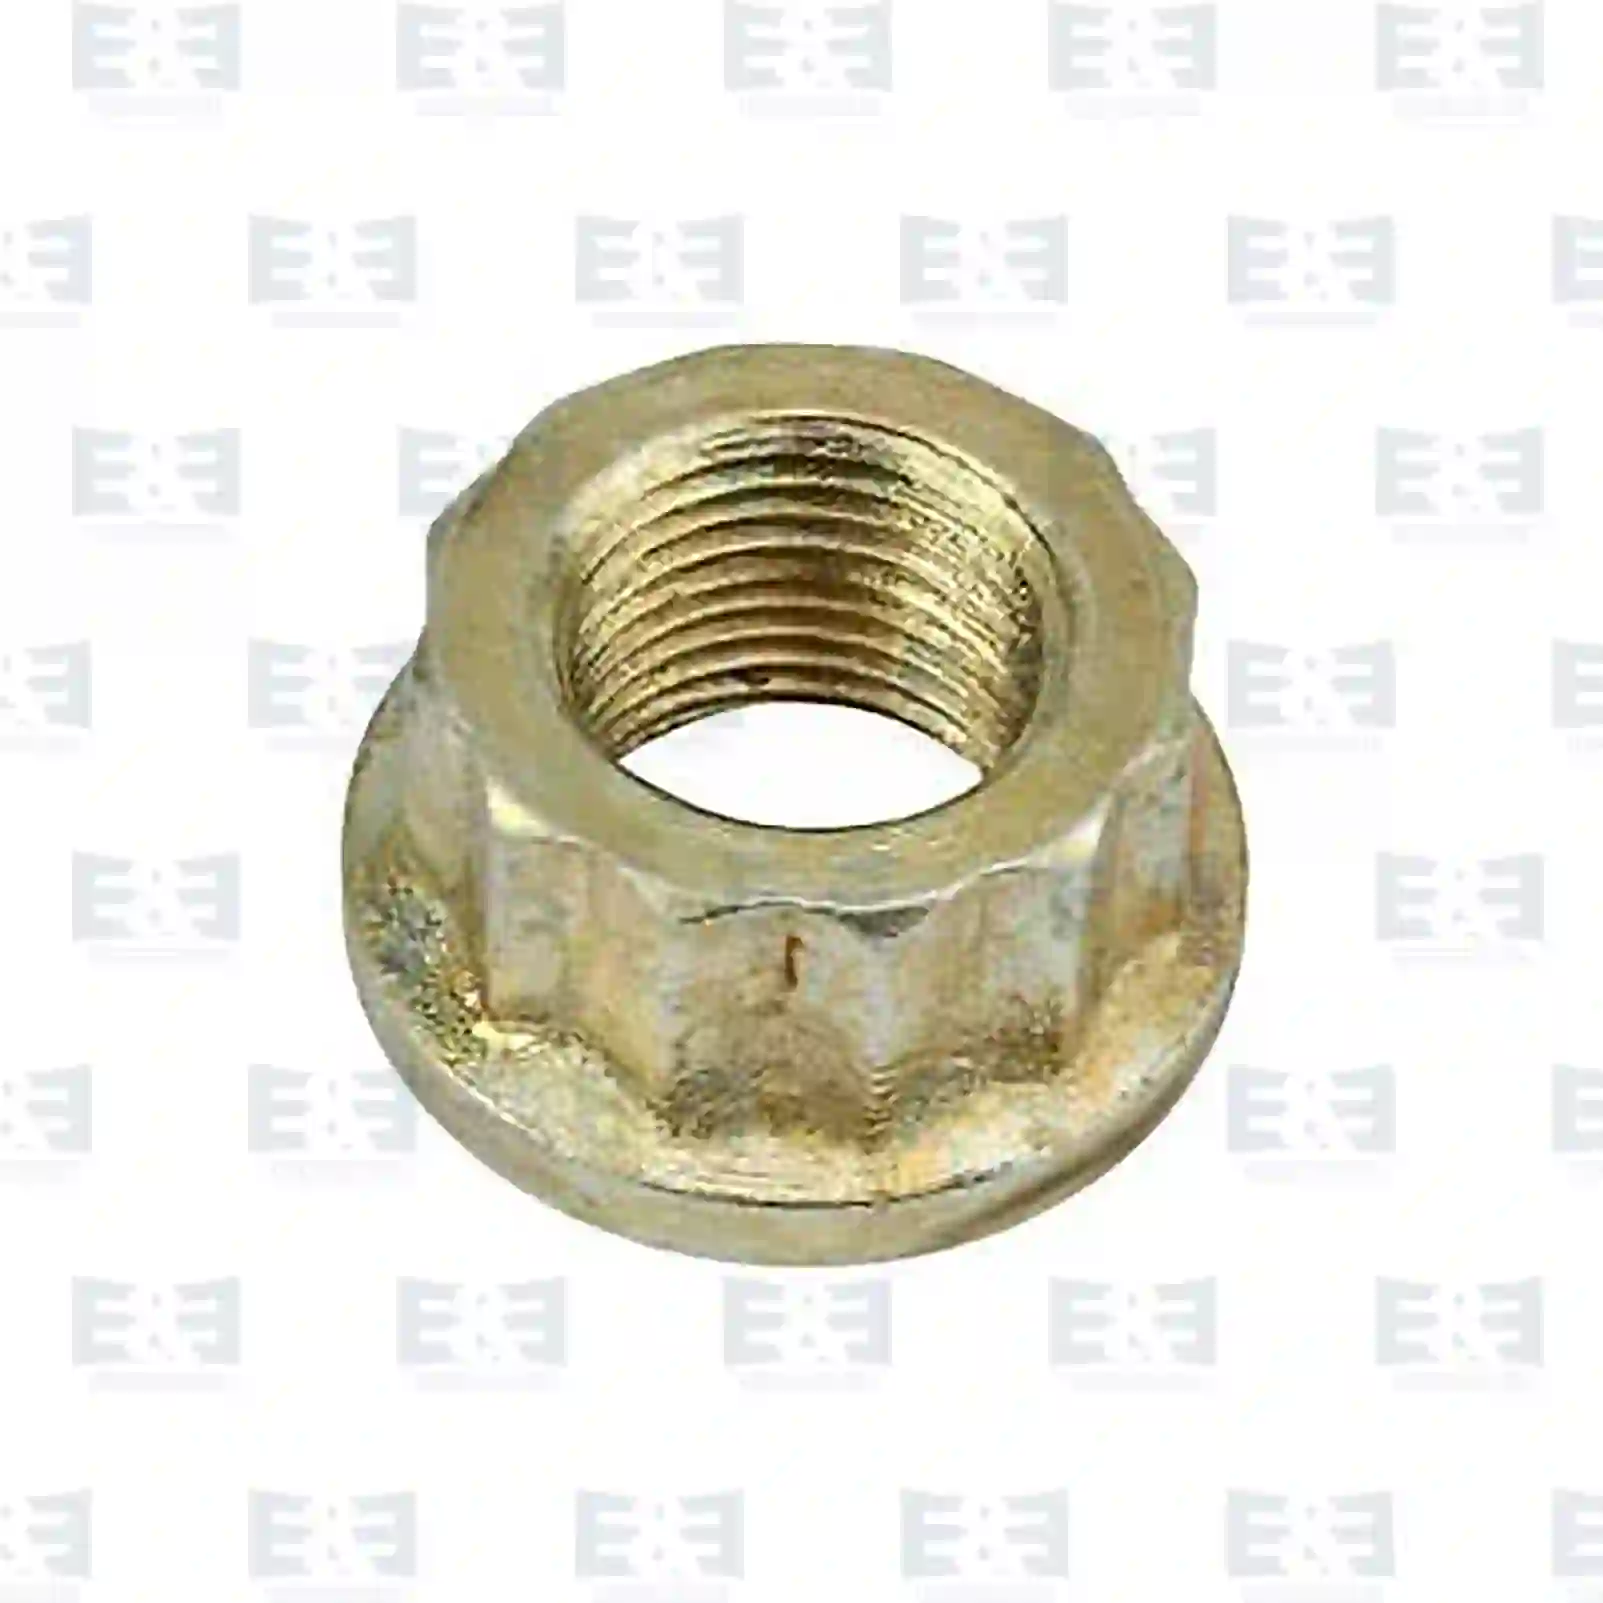  Connecting rod nut || E&E Truck Spare Parts | Truck Spare Parts, Auotomotive Spare Parts